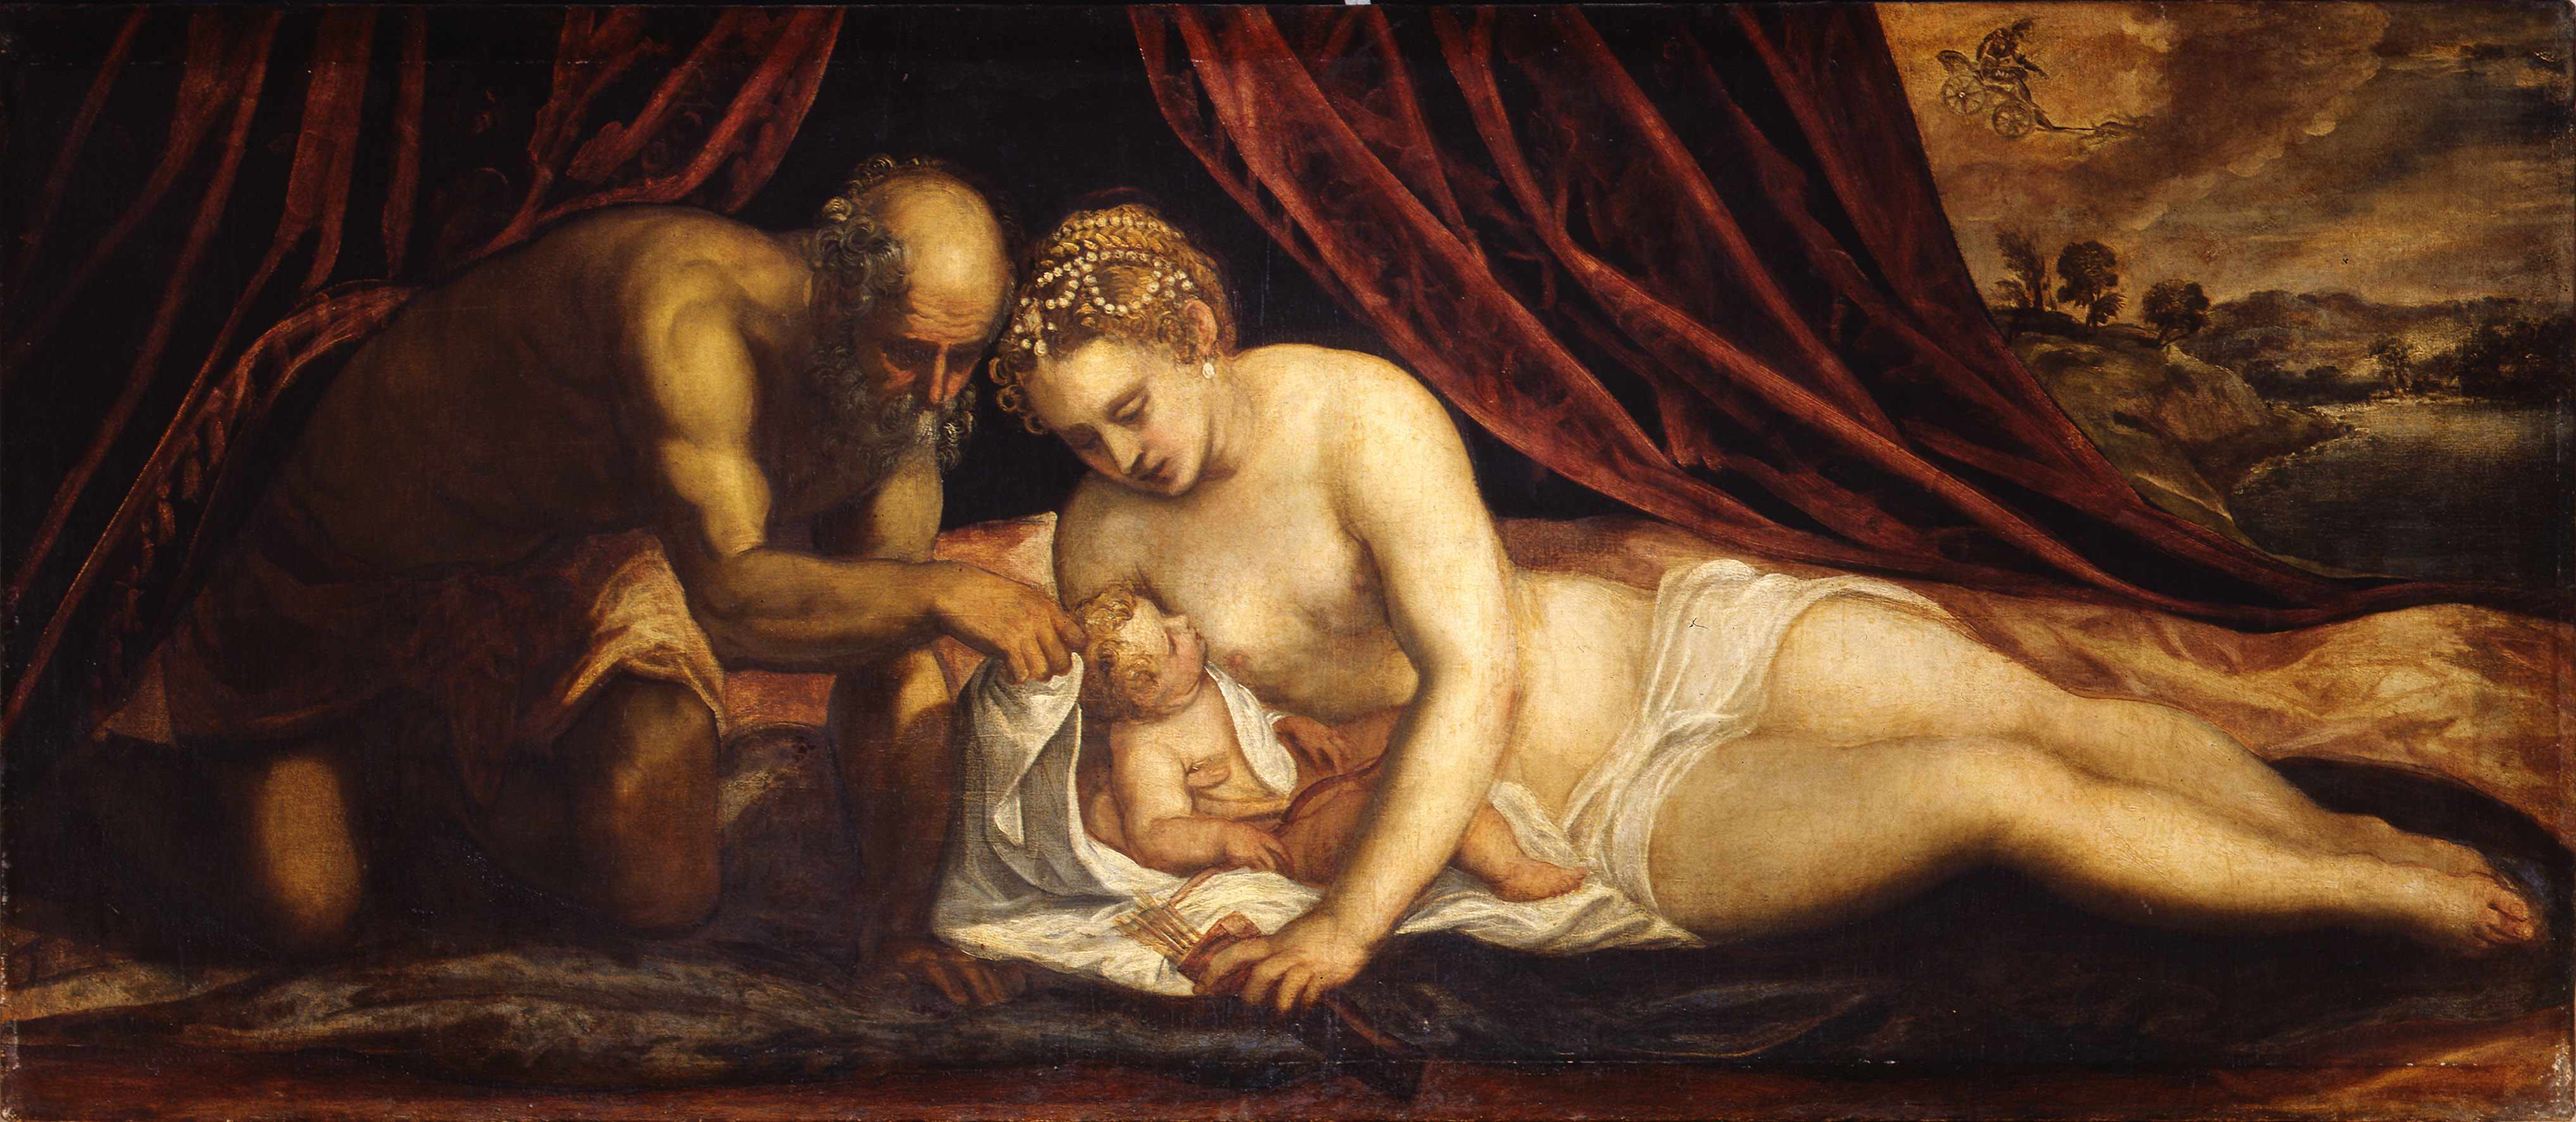 Greek goddess sex scene